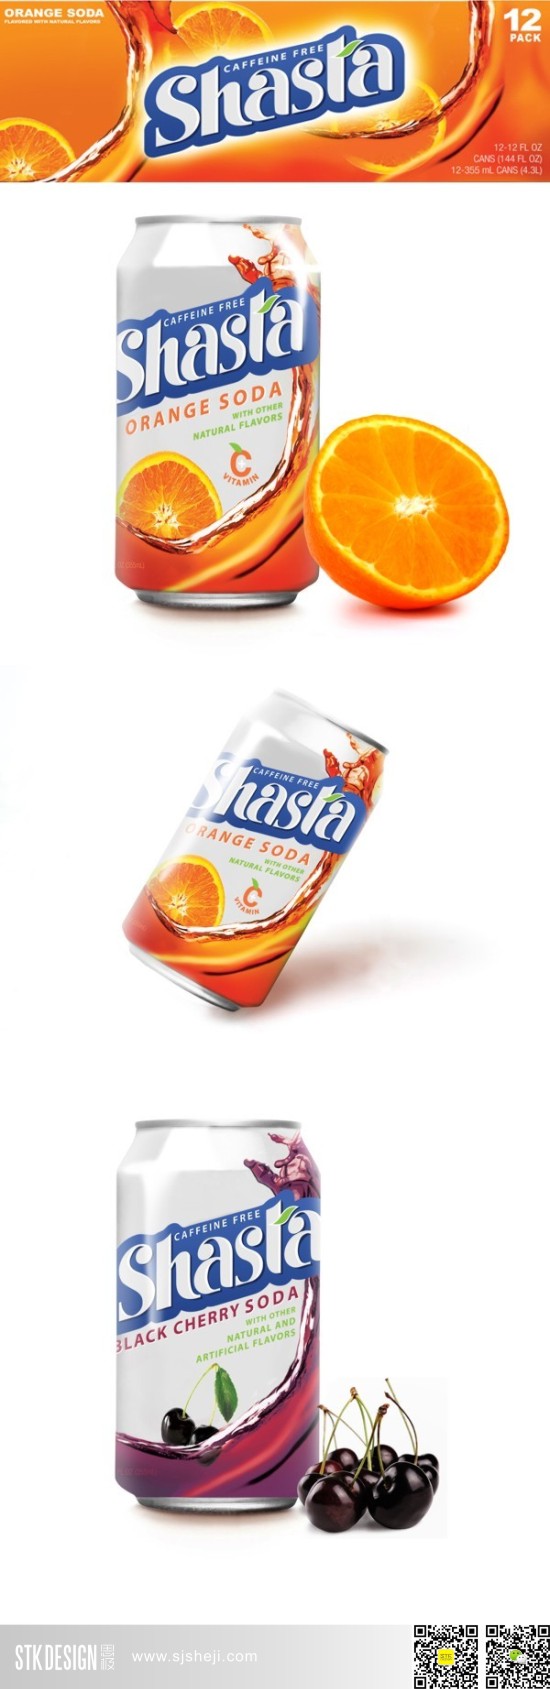 shasha orange SODA包装设计